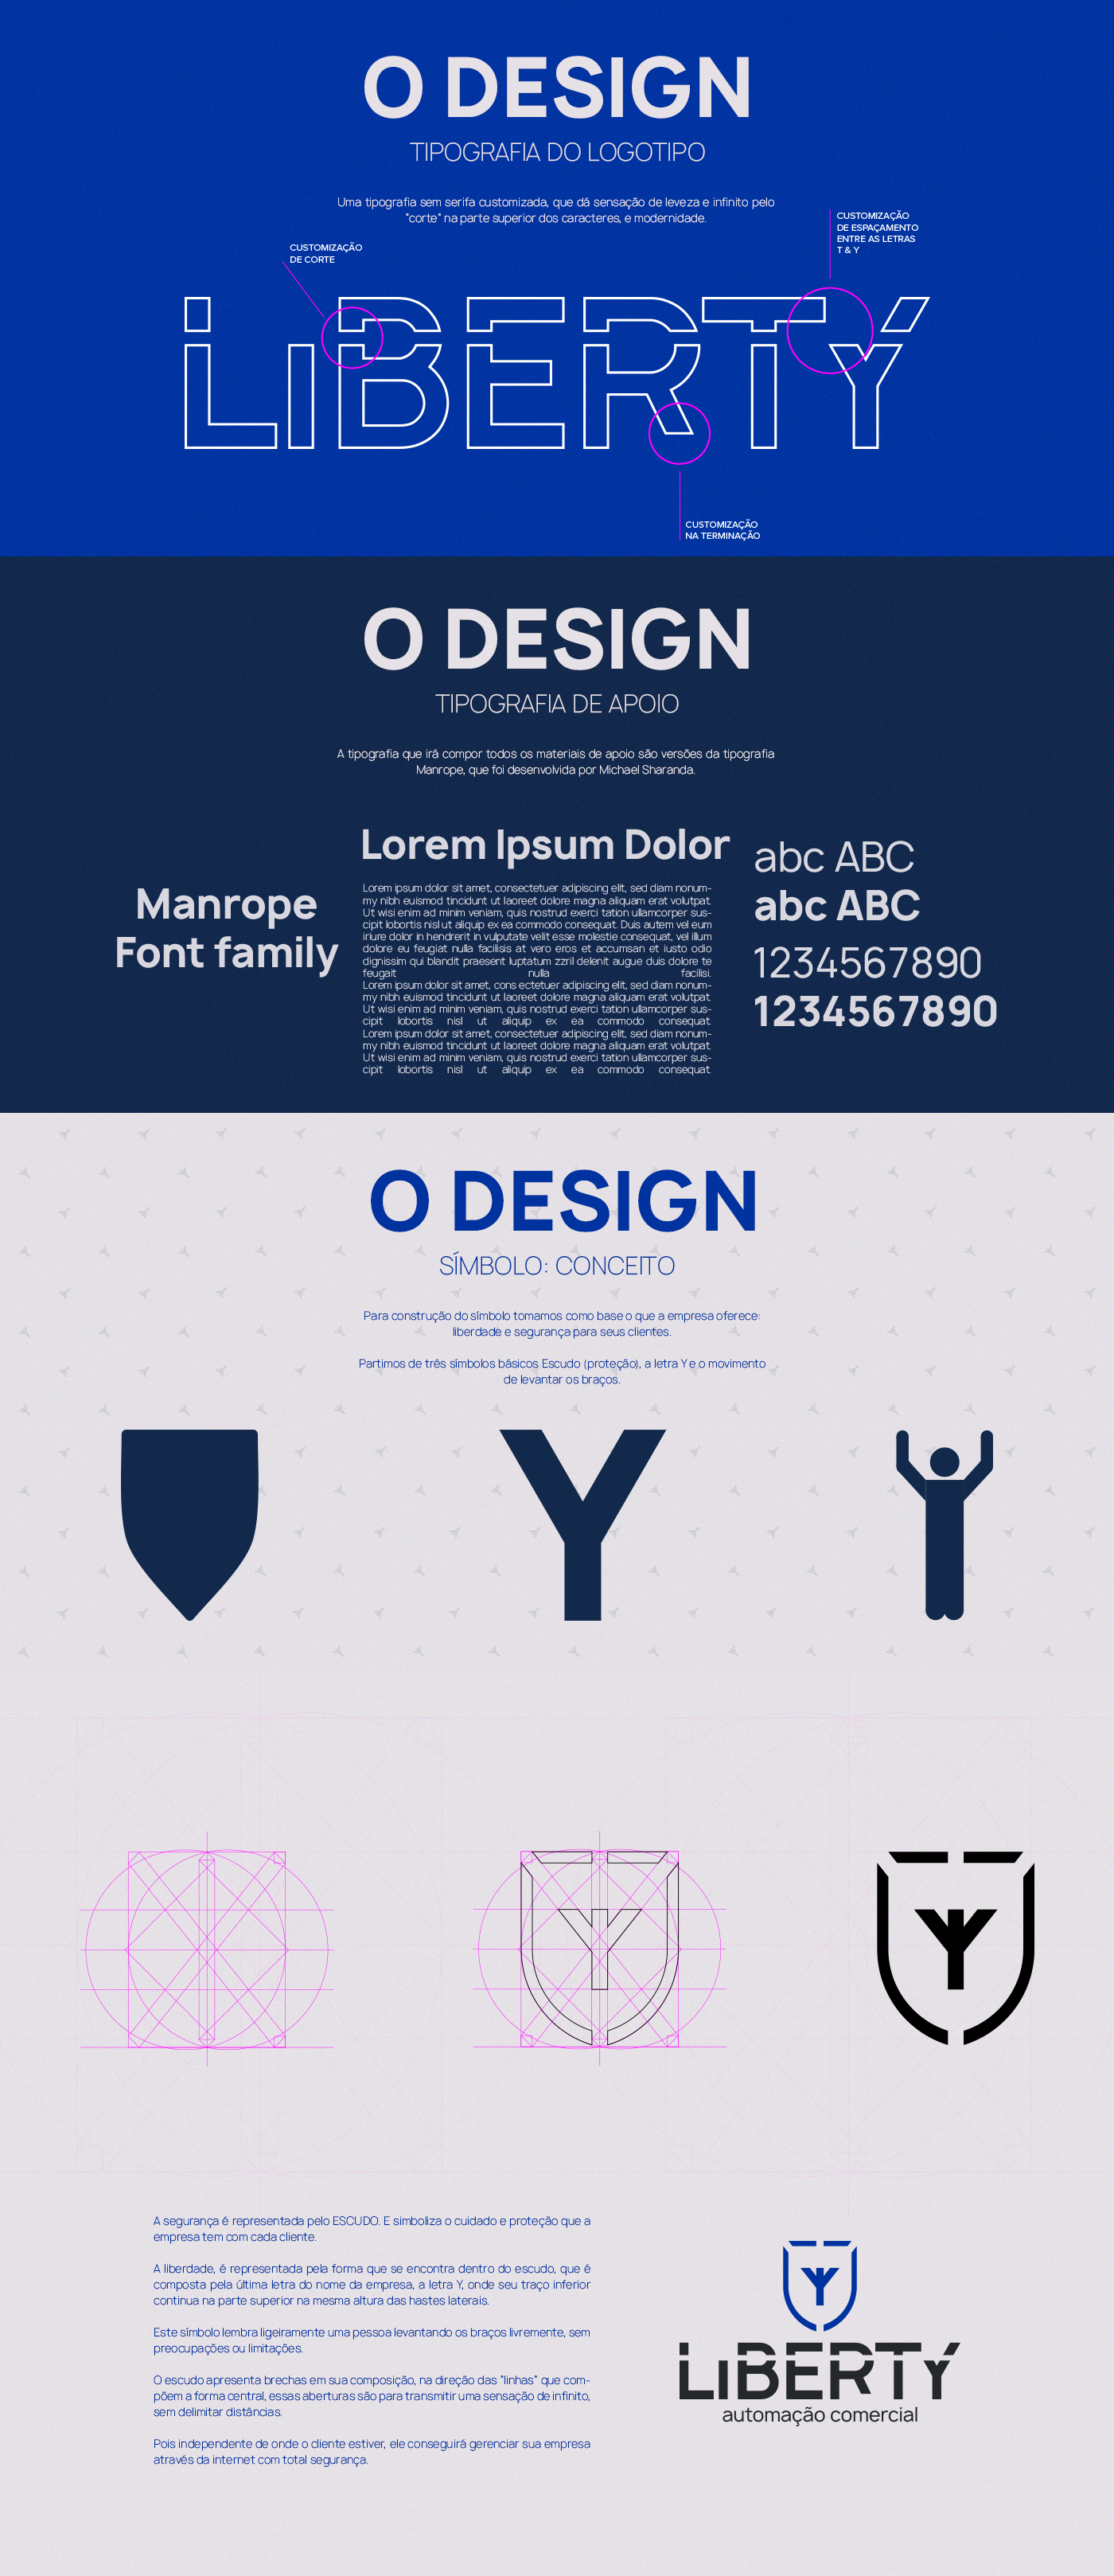 logo brand brading identity tecnology Data analytics visual design inspiration